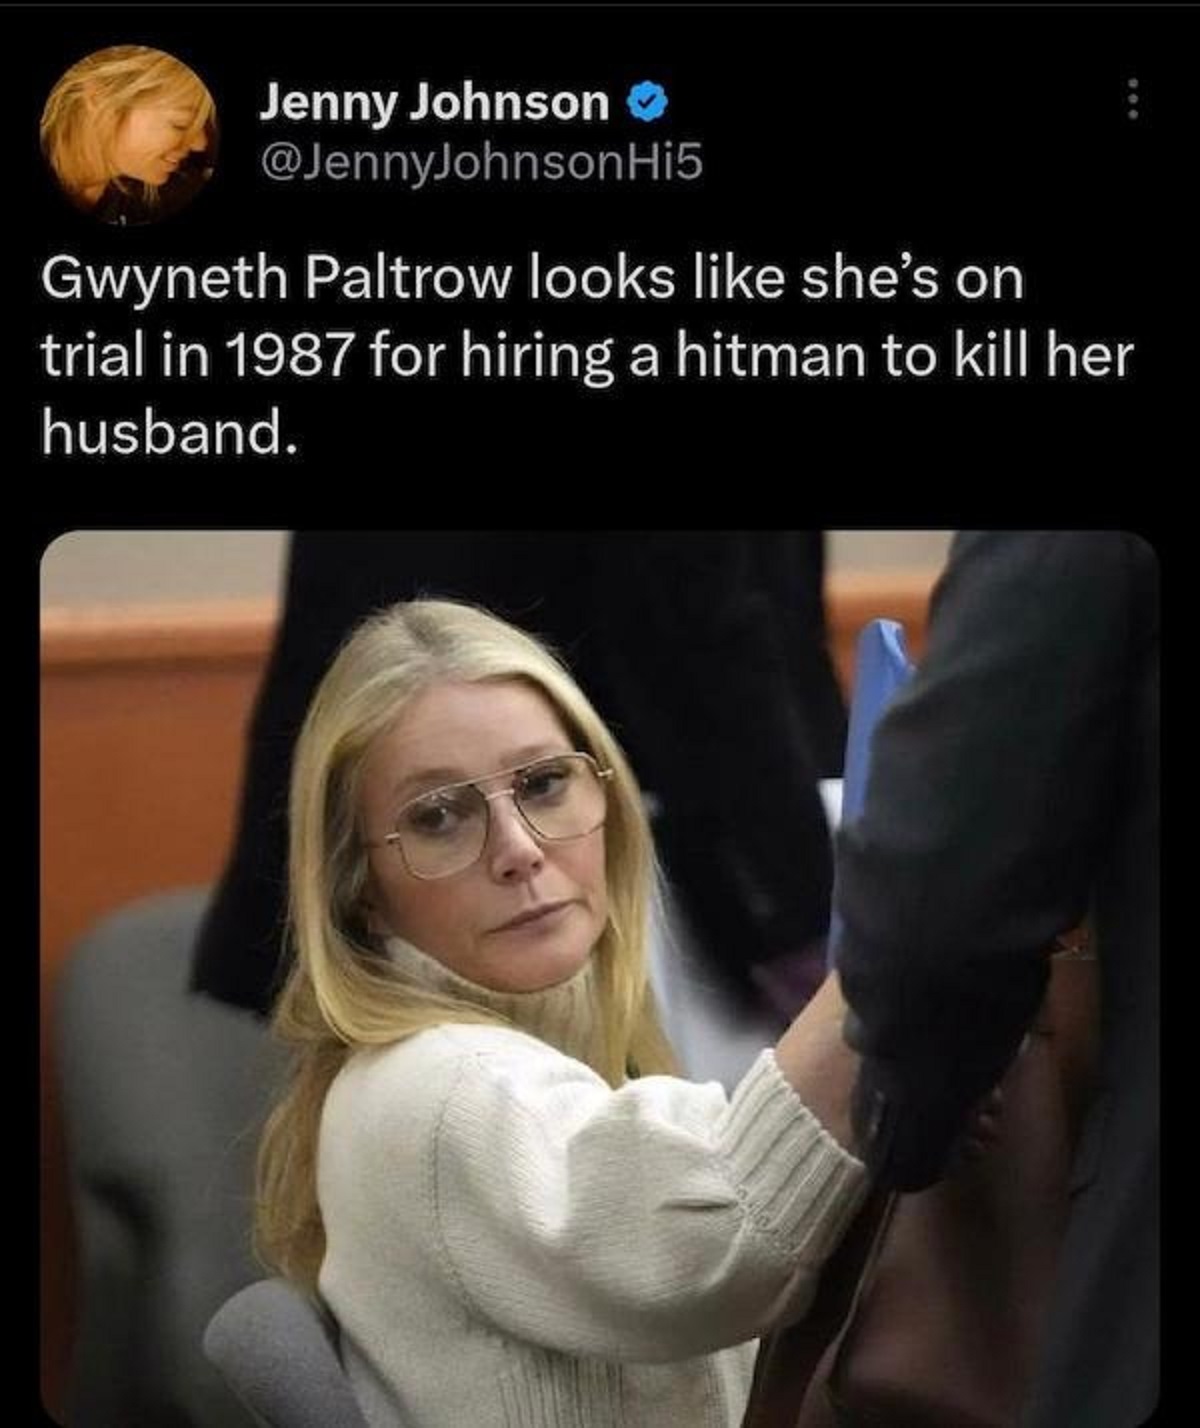 gwyneth paltrow court trial - Jenny Johnson Hi5 Gwyneth Paltrow looks she's on trial in 1987 for hiring a hitman to kill her husband.